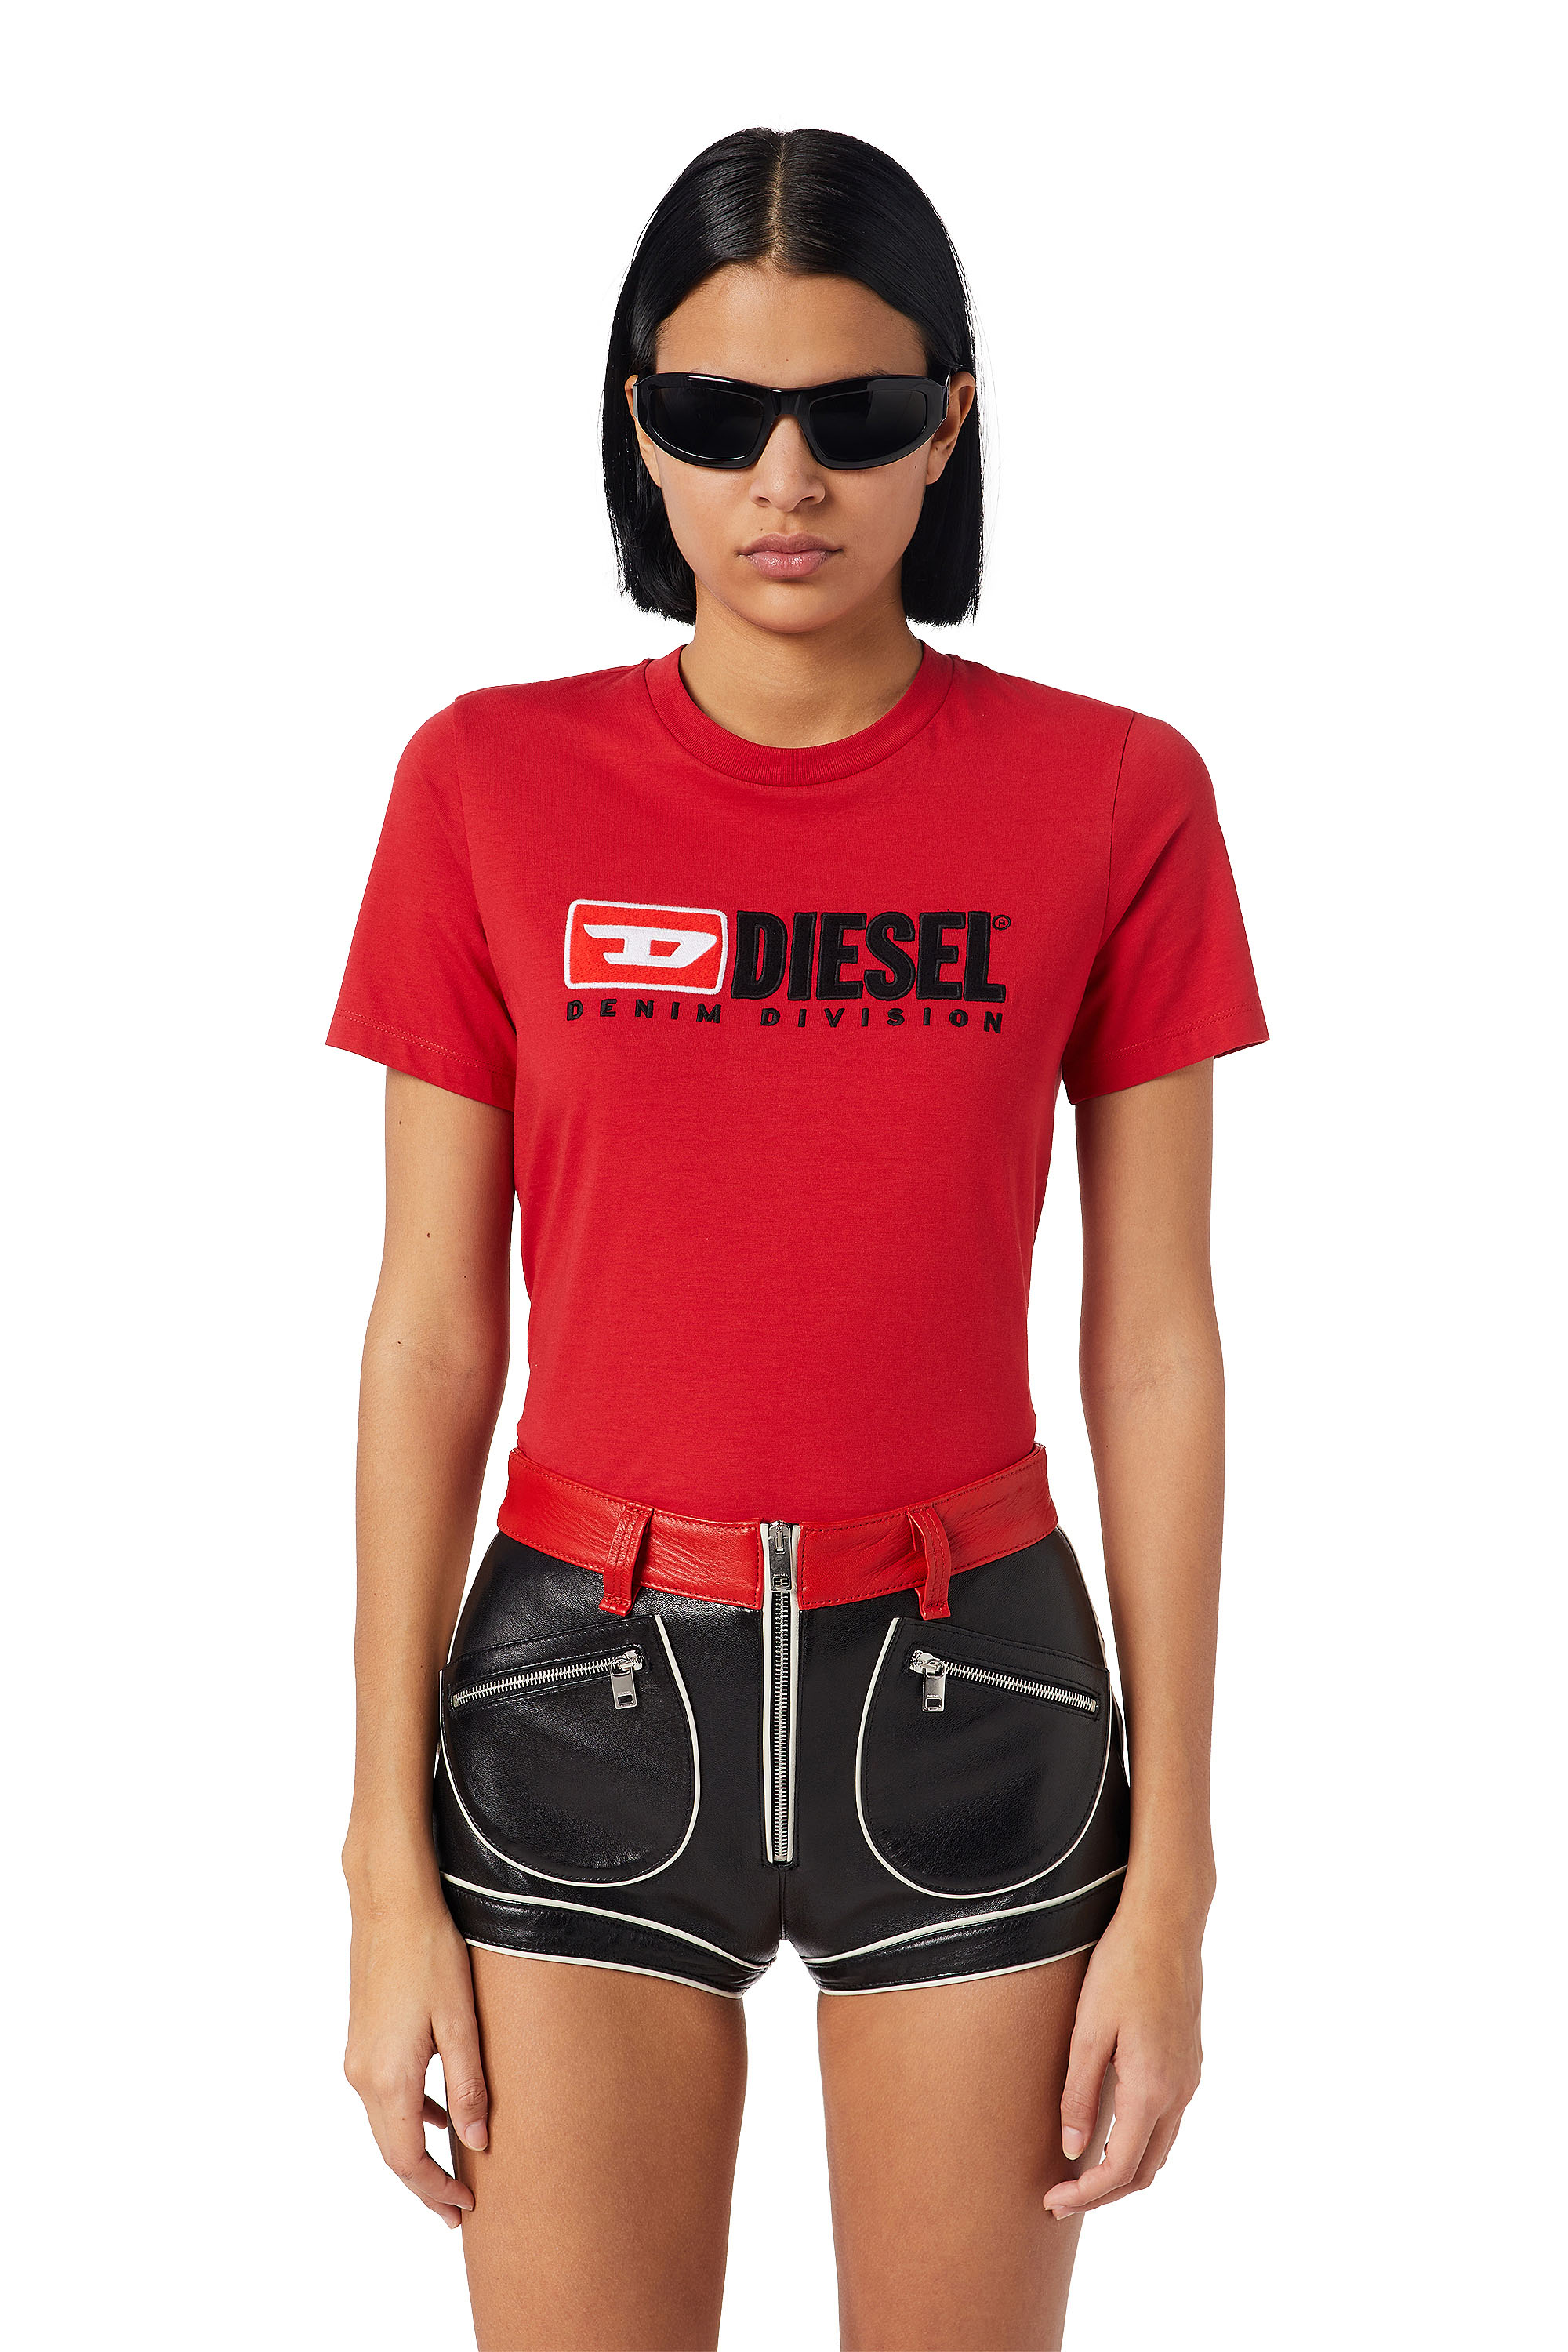 Diesel - T-REG-DIV, Rojo - Image 3